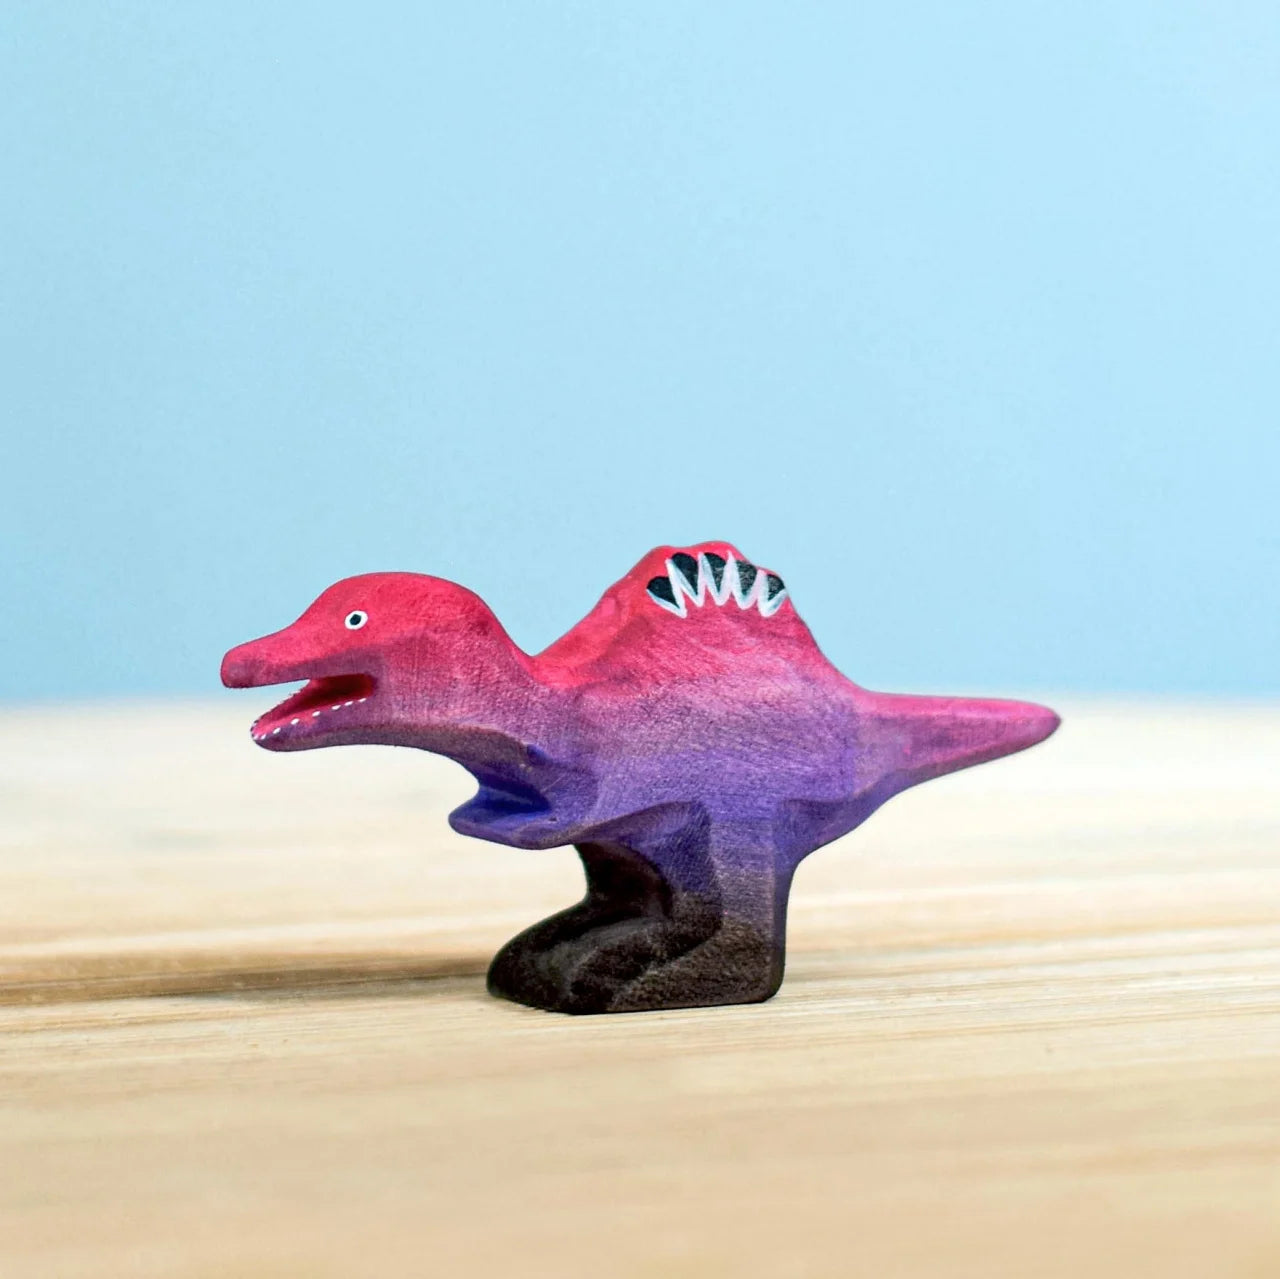 Bumbu Toys Dinosaur Spinosaurus Small